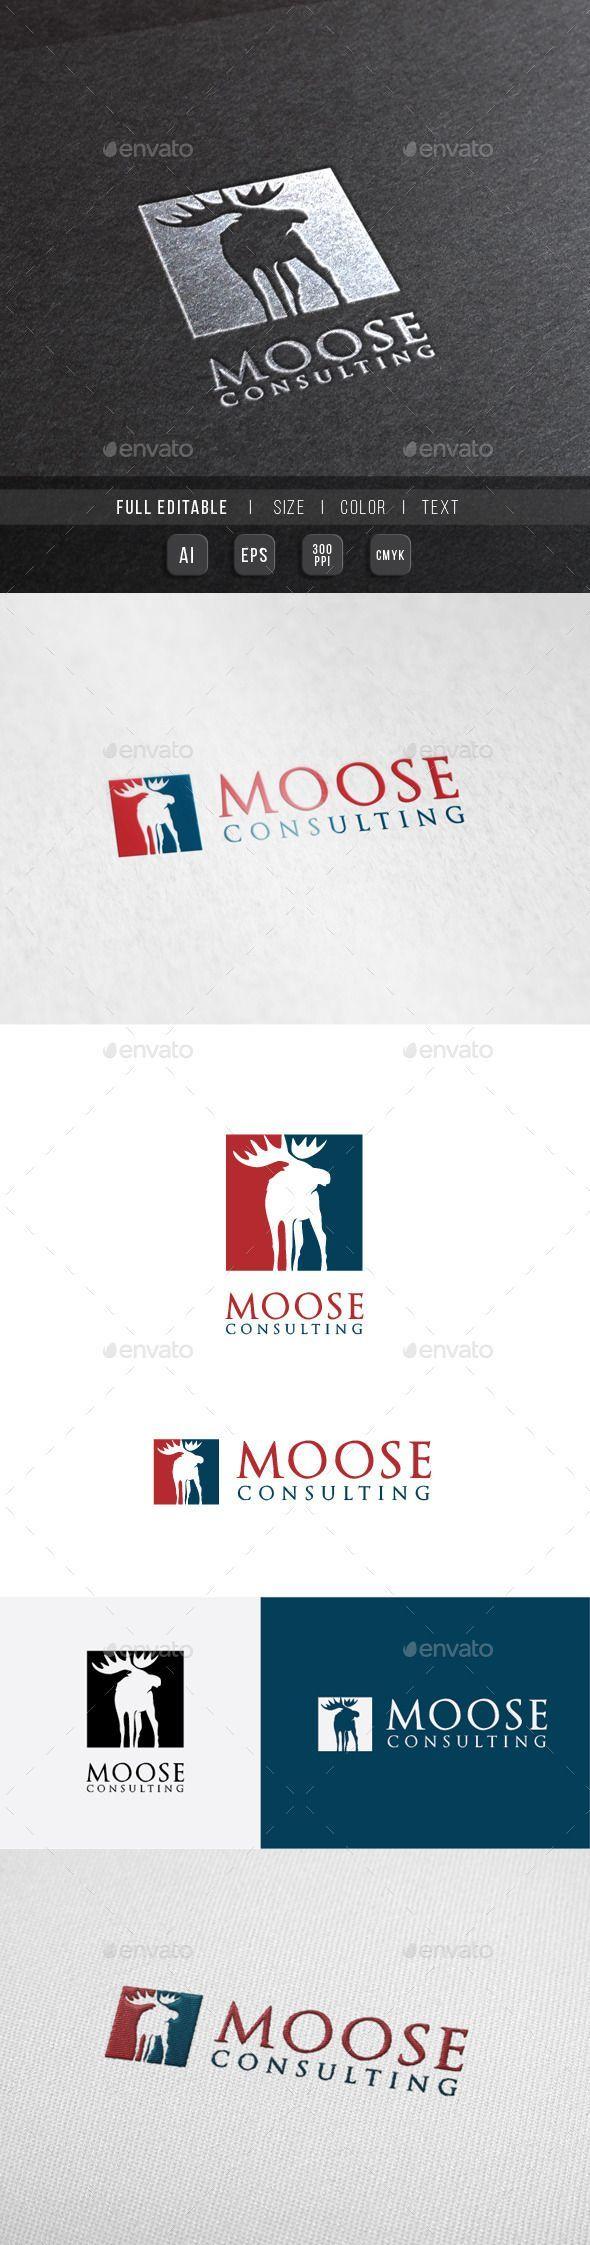 100 Moose Logo - Moose Finance Consulting Logo Editable 100 Re Sizable 100